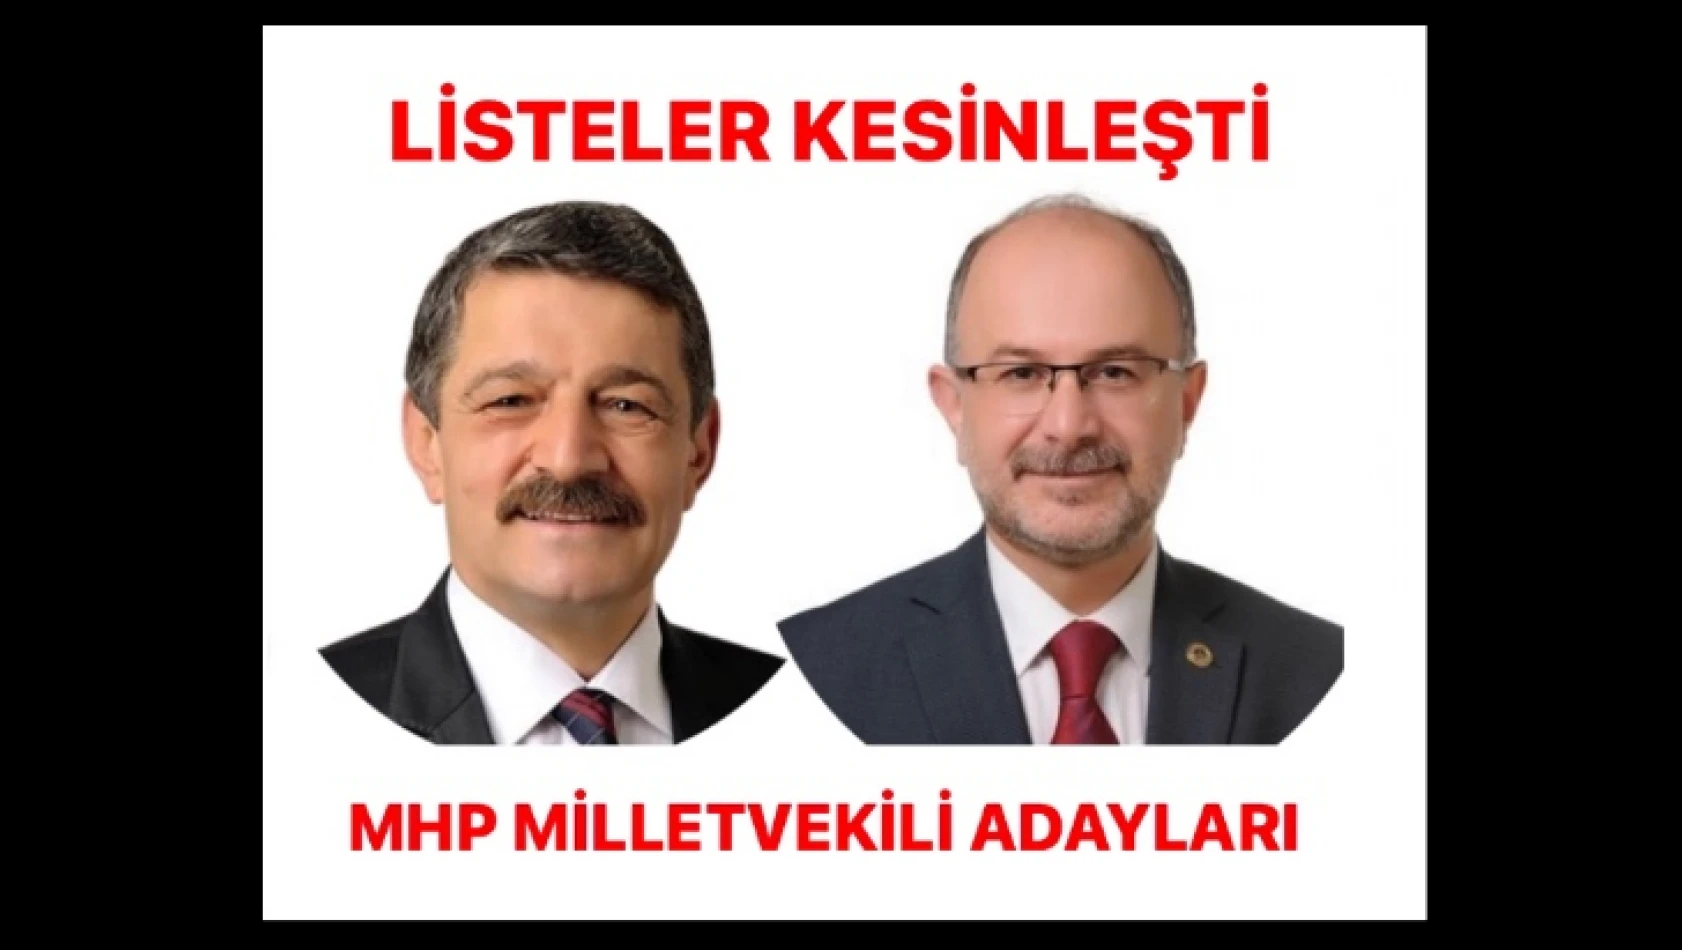 MHP Milletvekili Aday Listesi yayınlandı